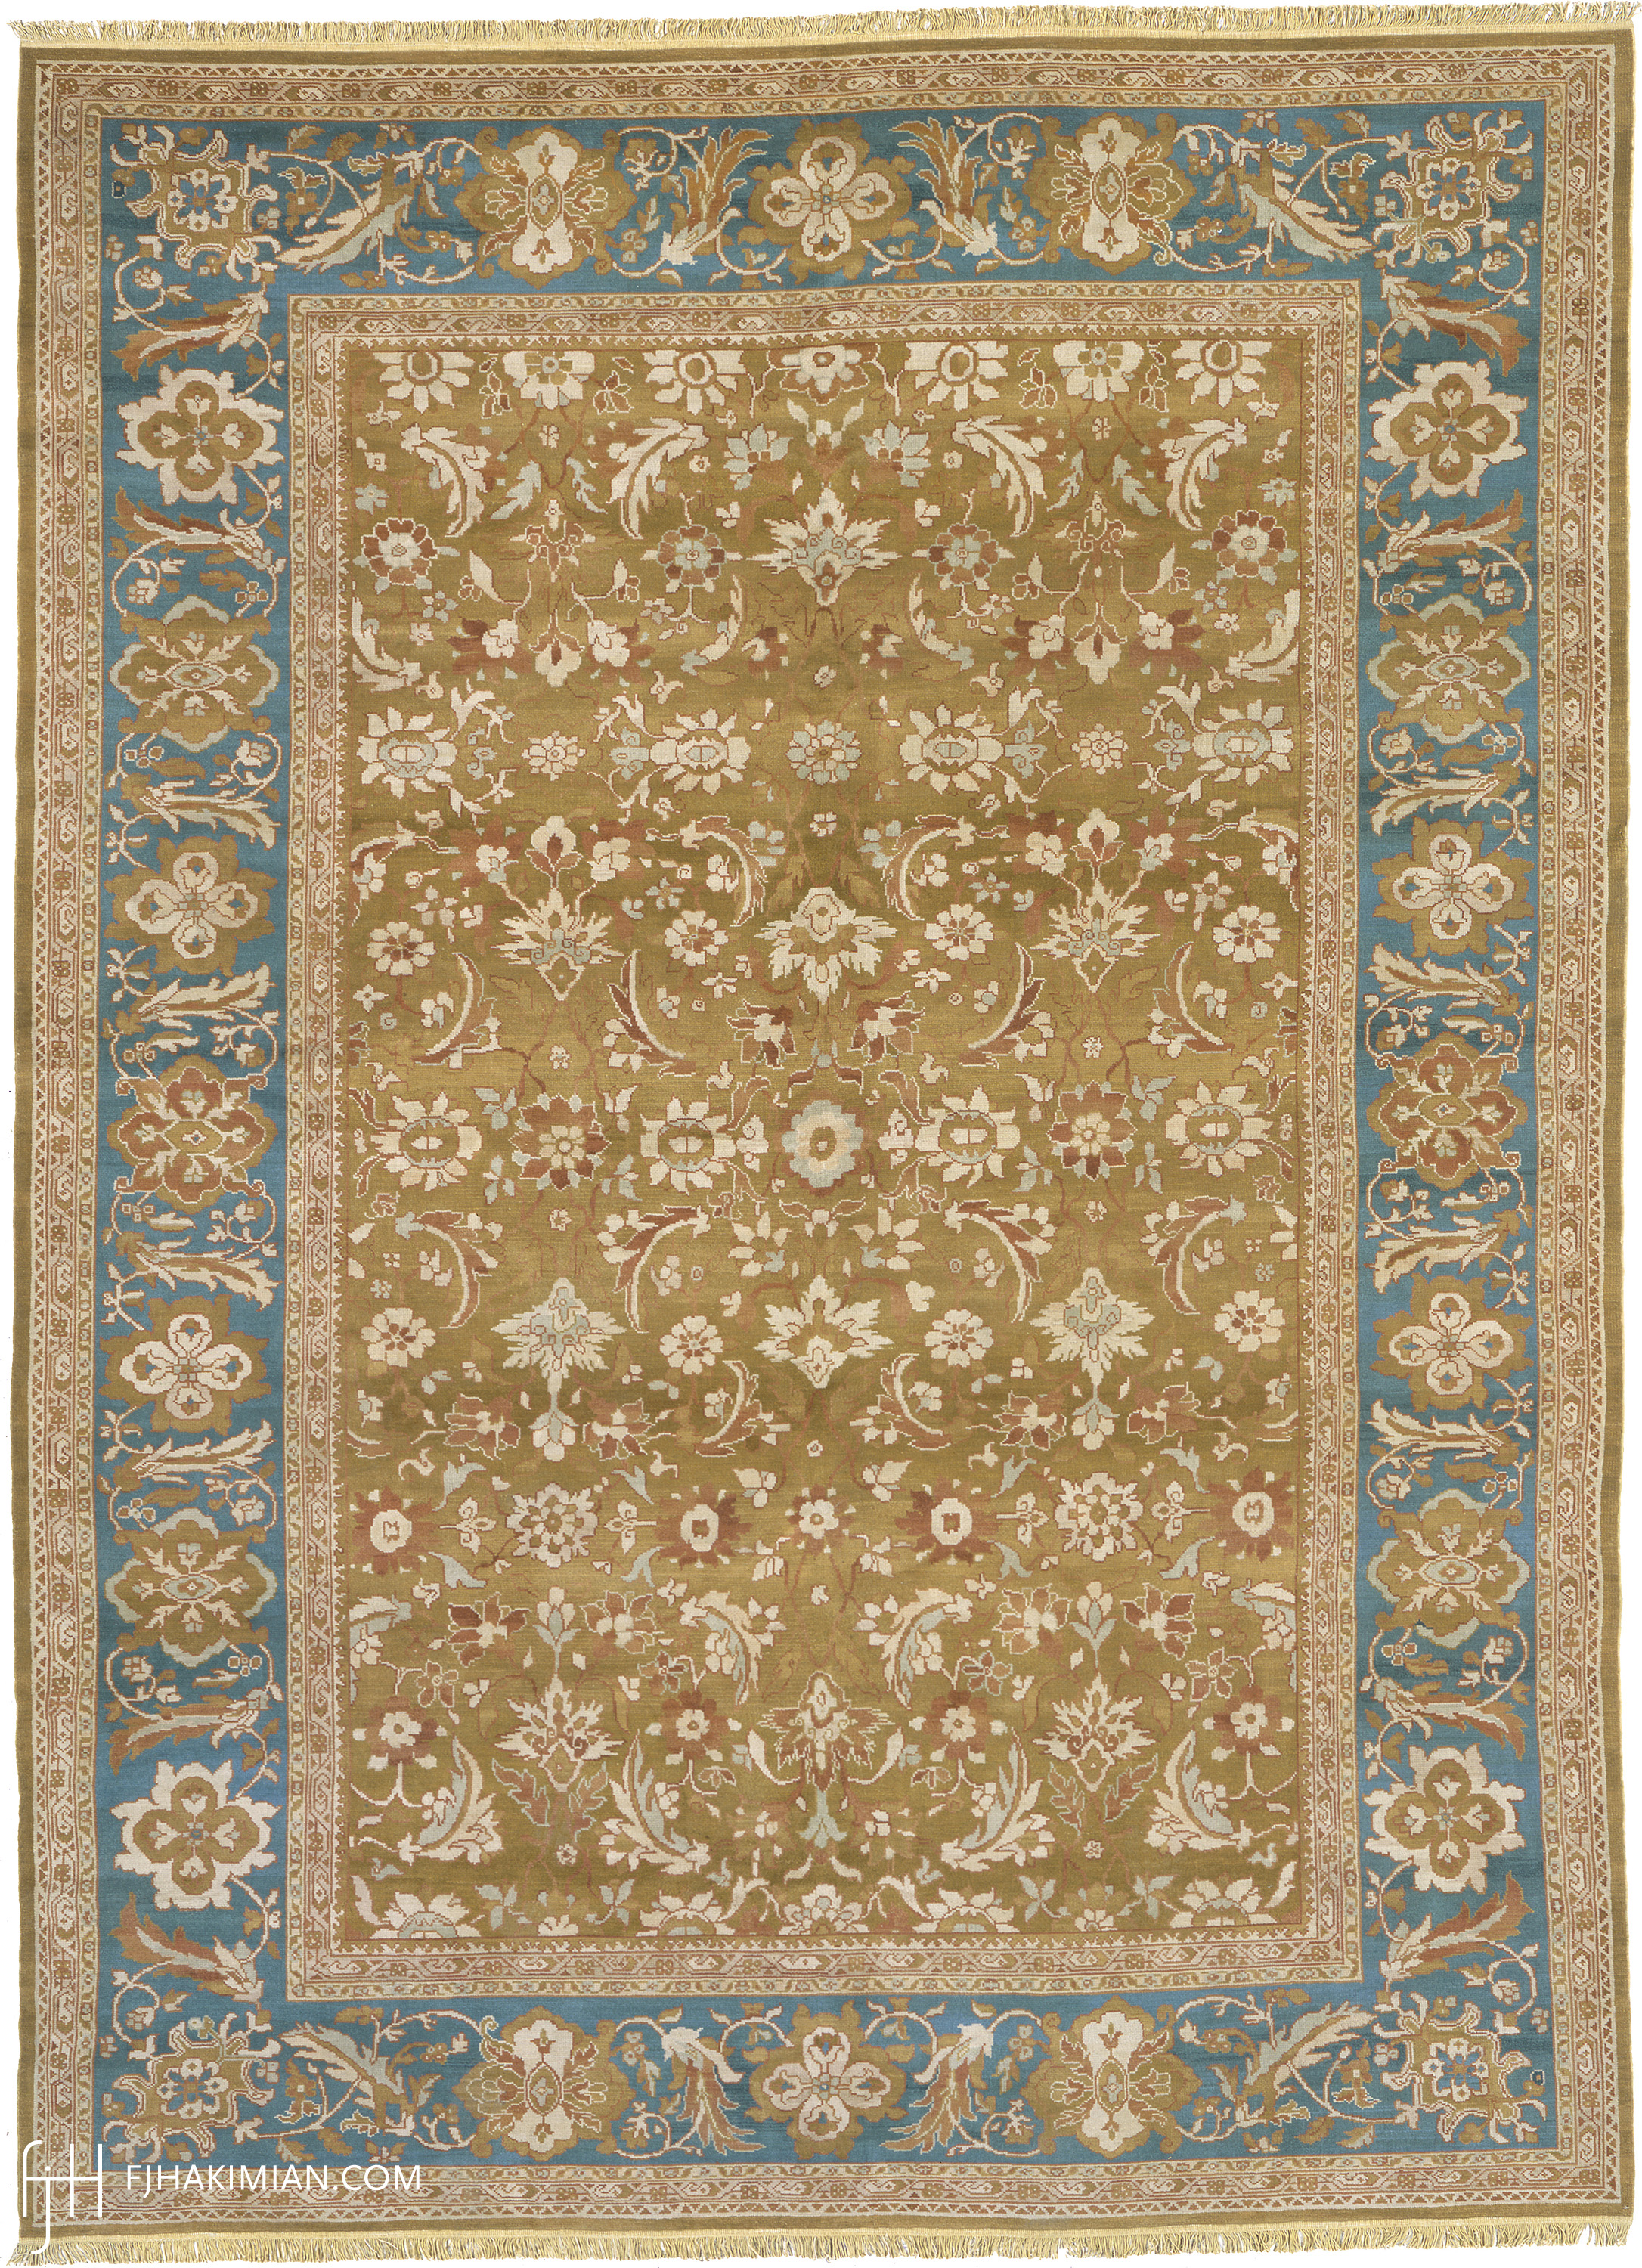 Custom Silfen Design | FJ Hakimain | Carpet Gallery in NY